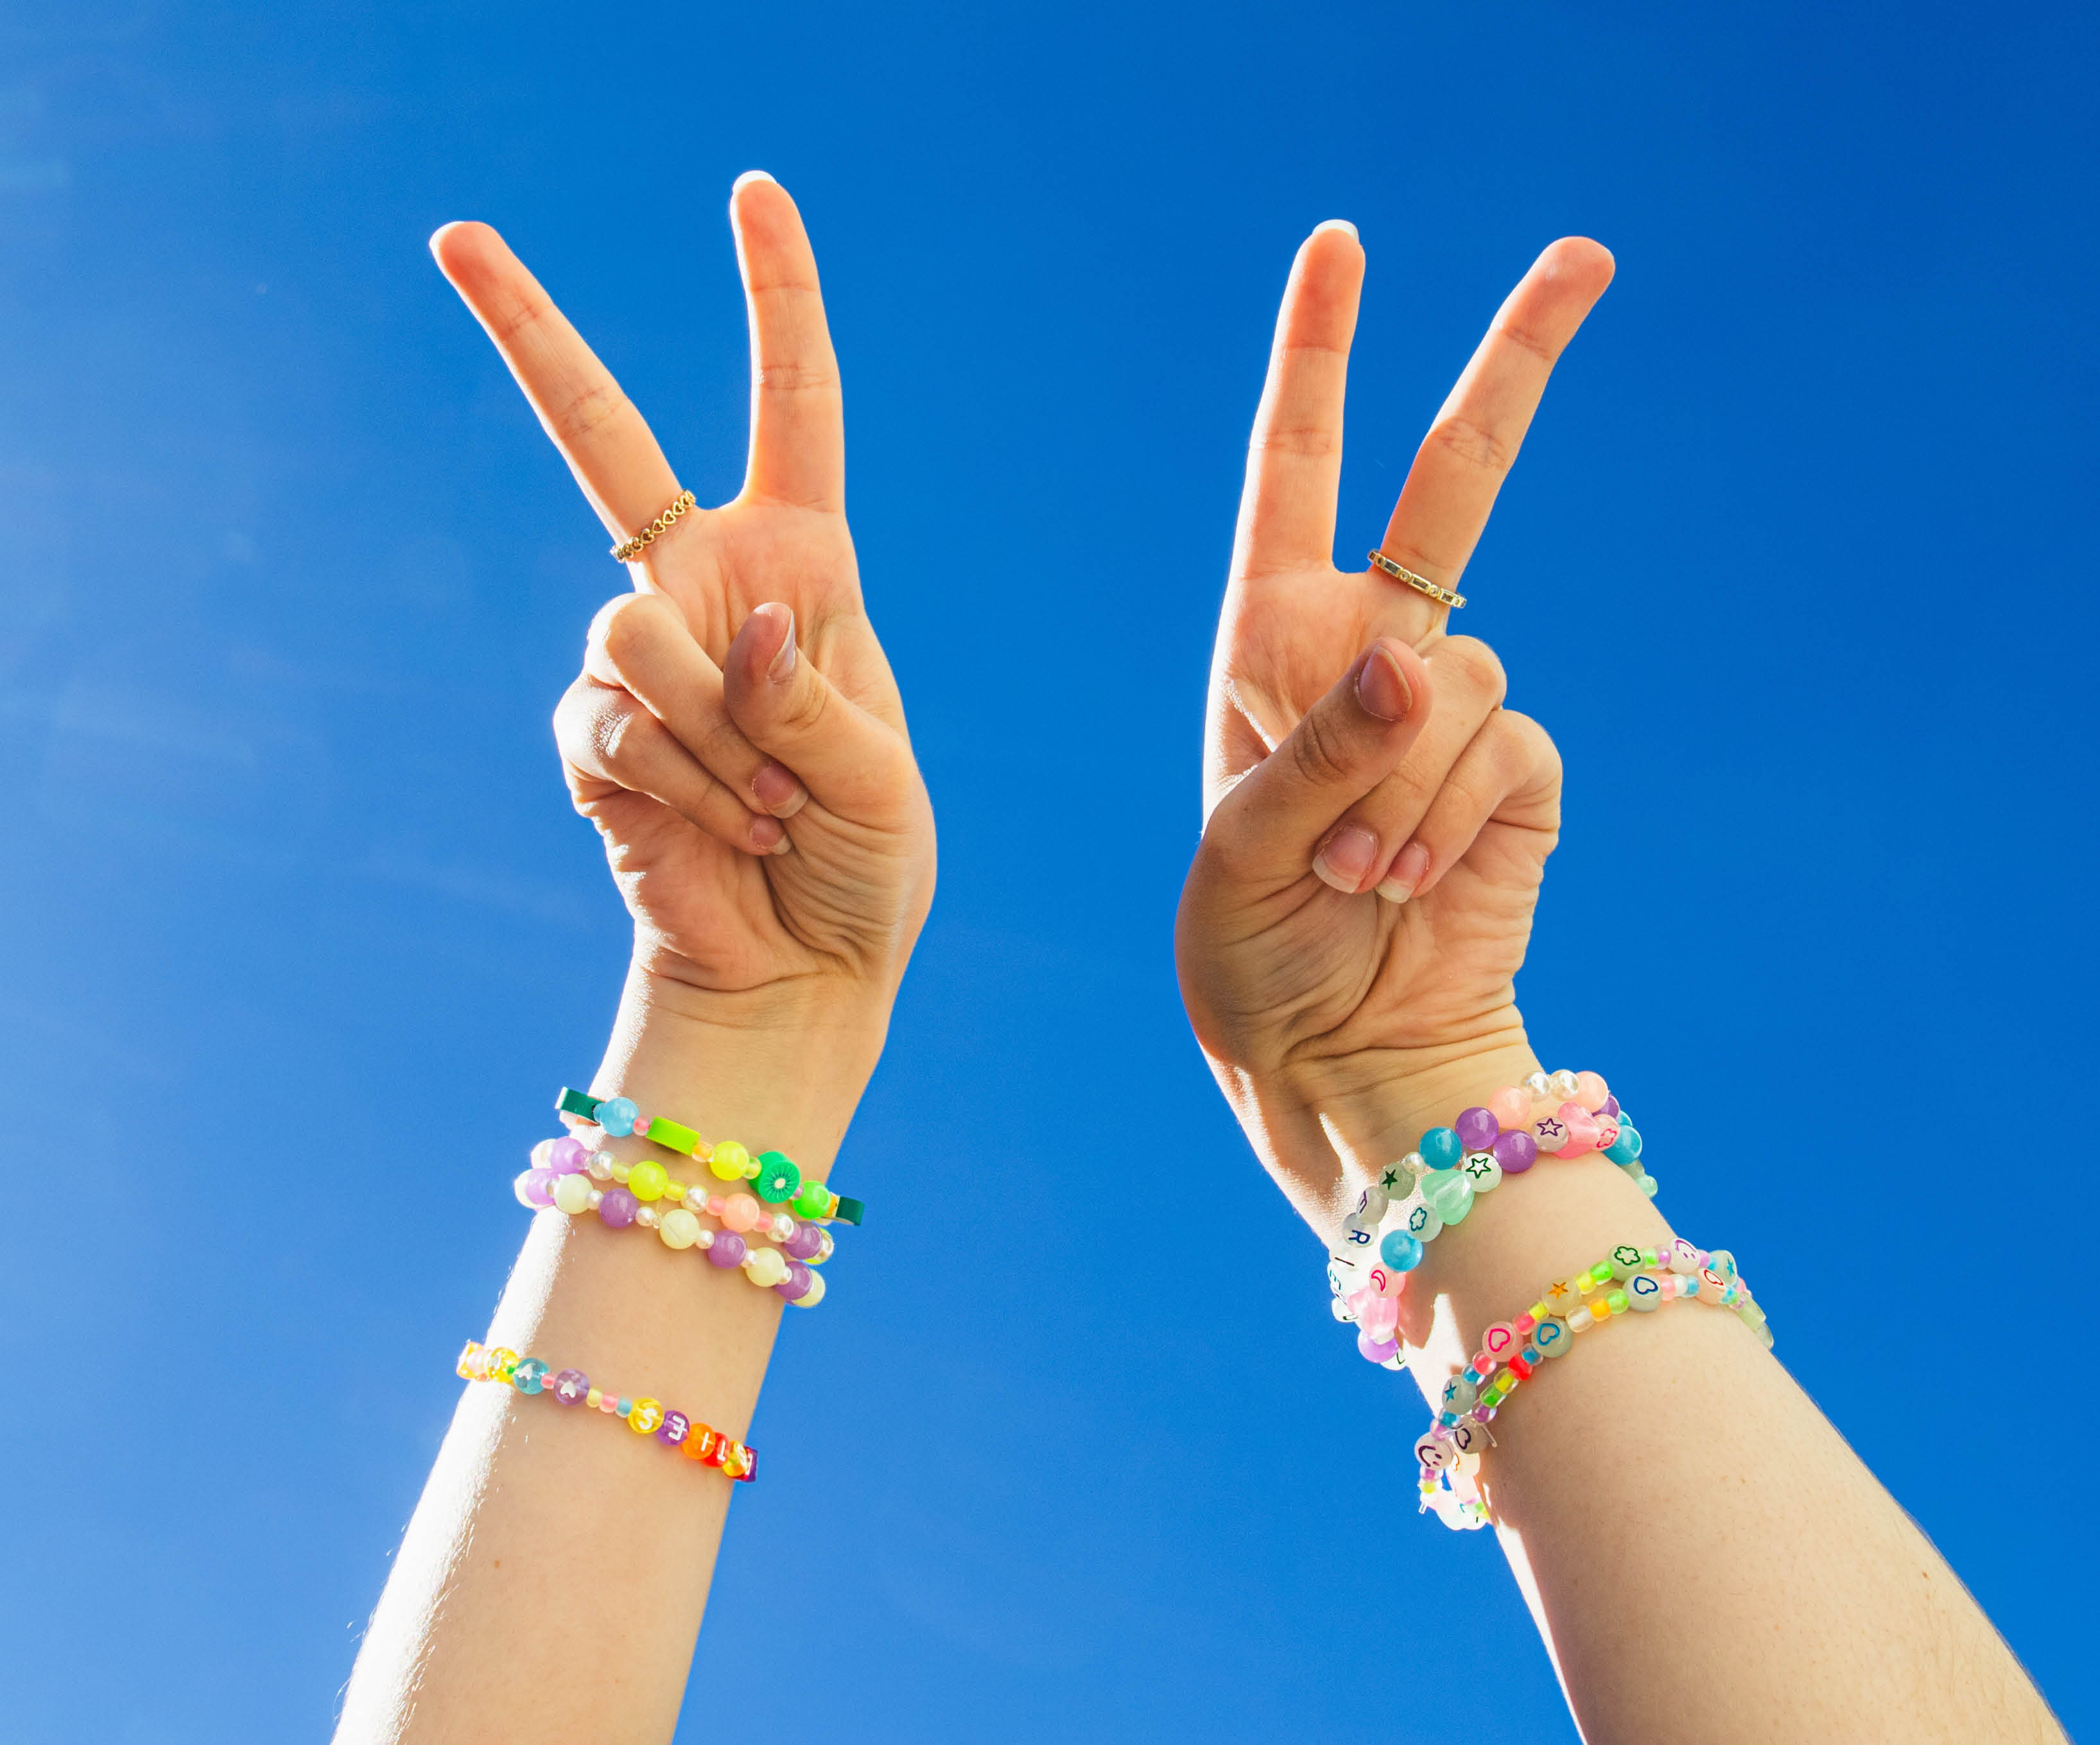 Arms in air wearing friendship bracelets 